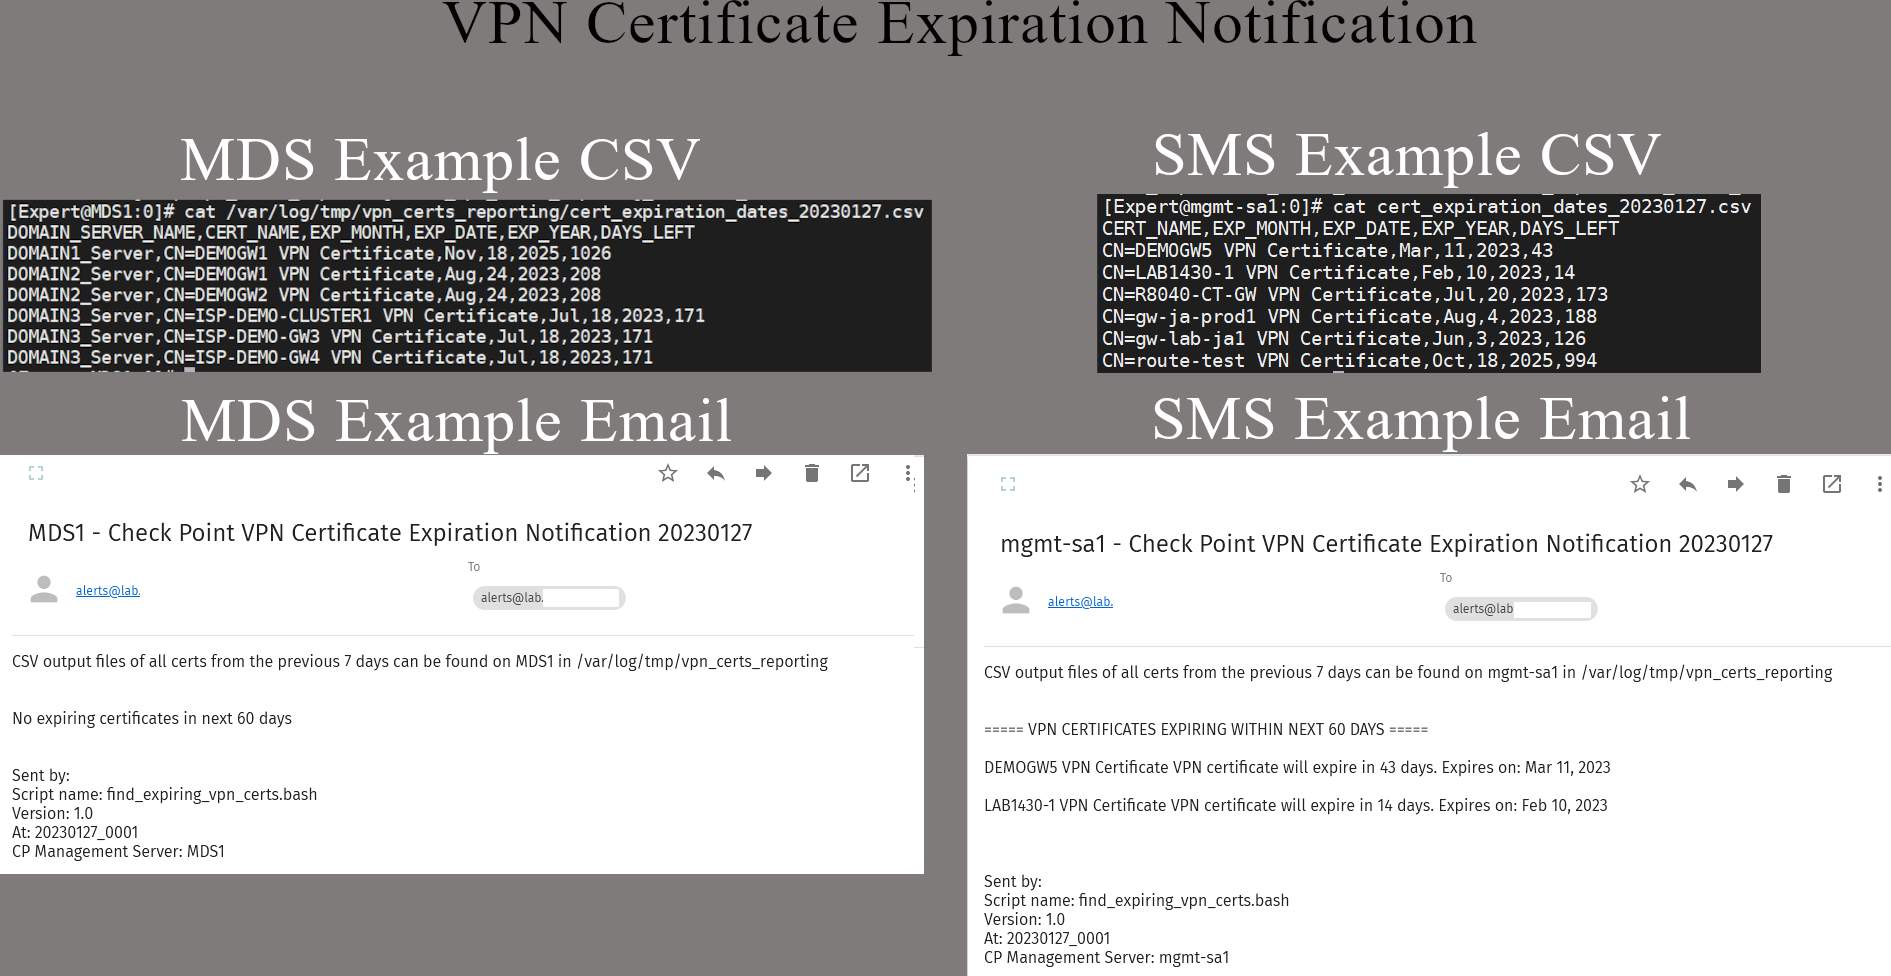 Do VPN certificates expire?